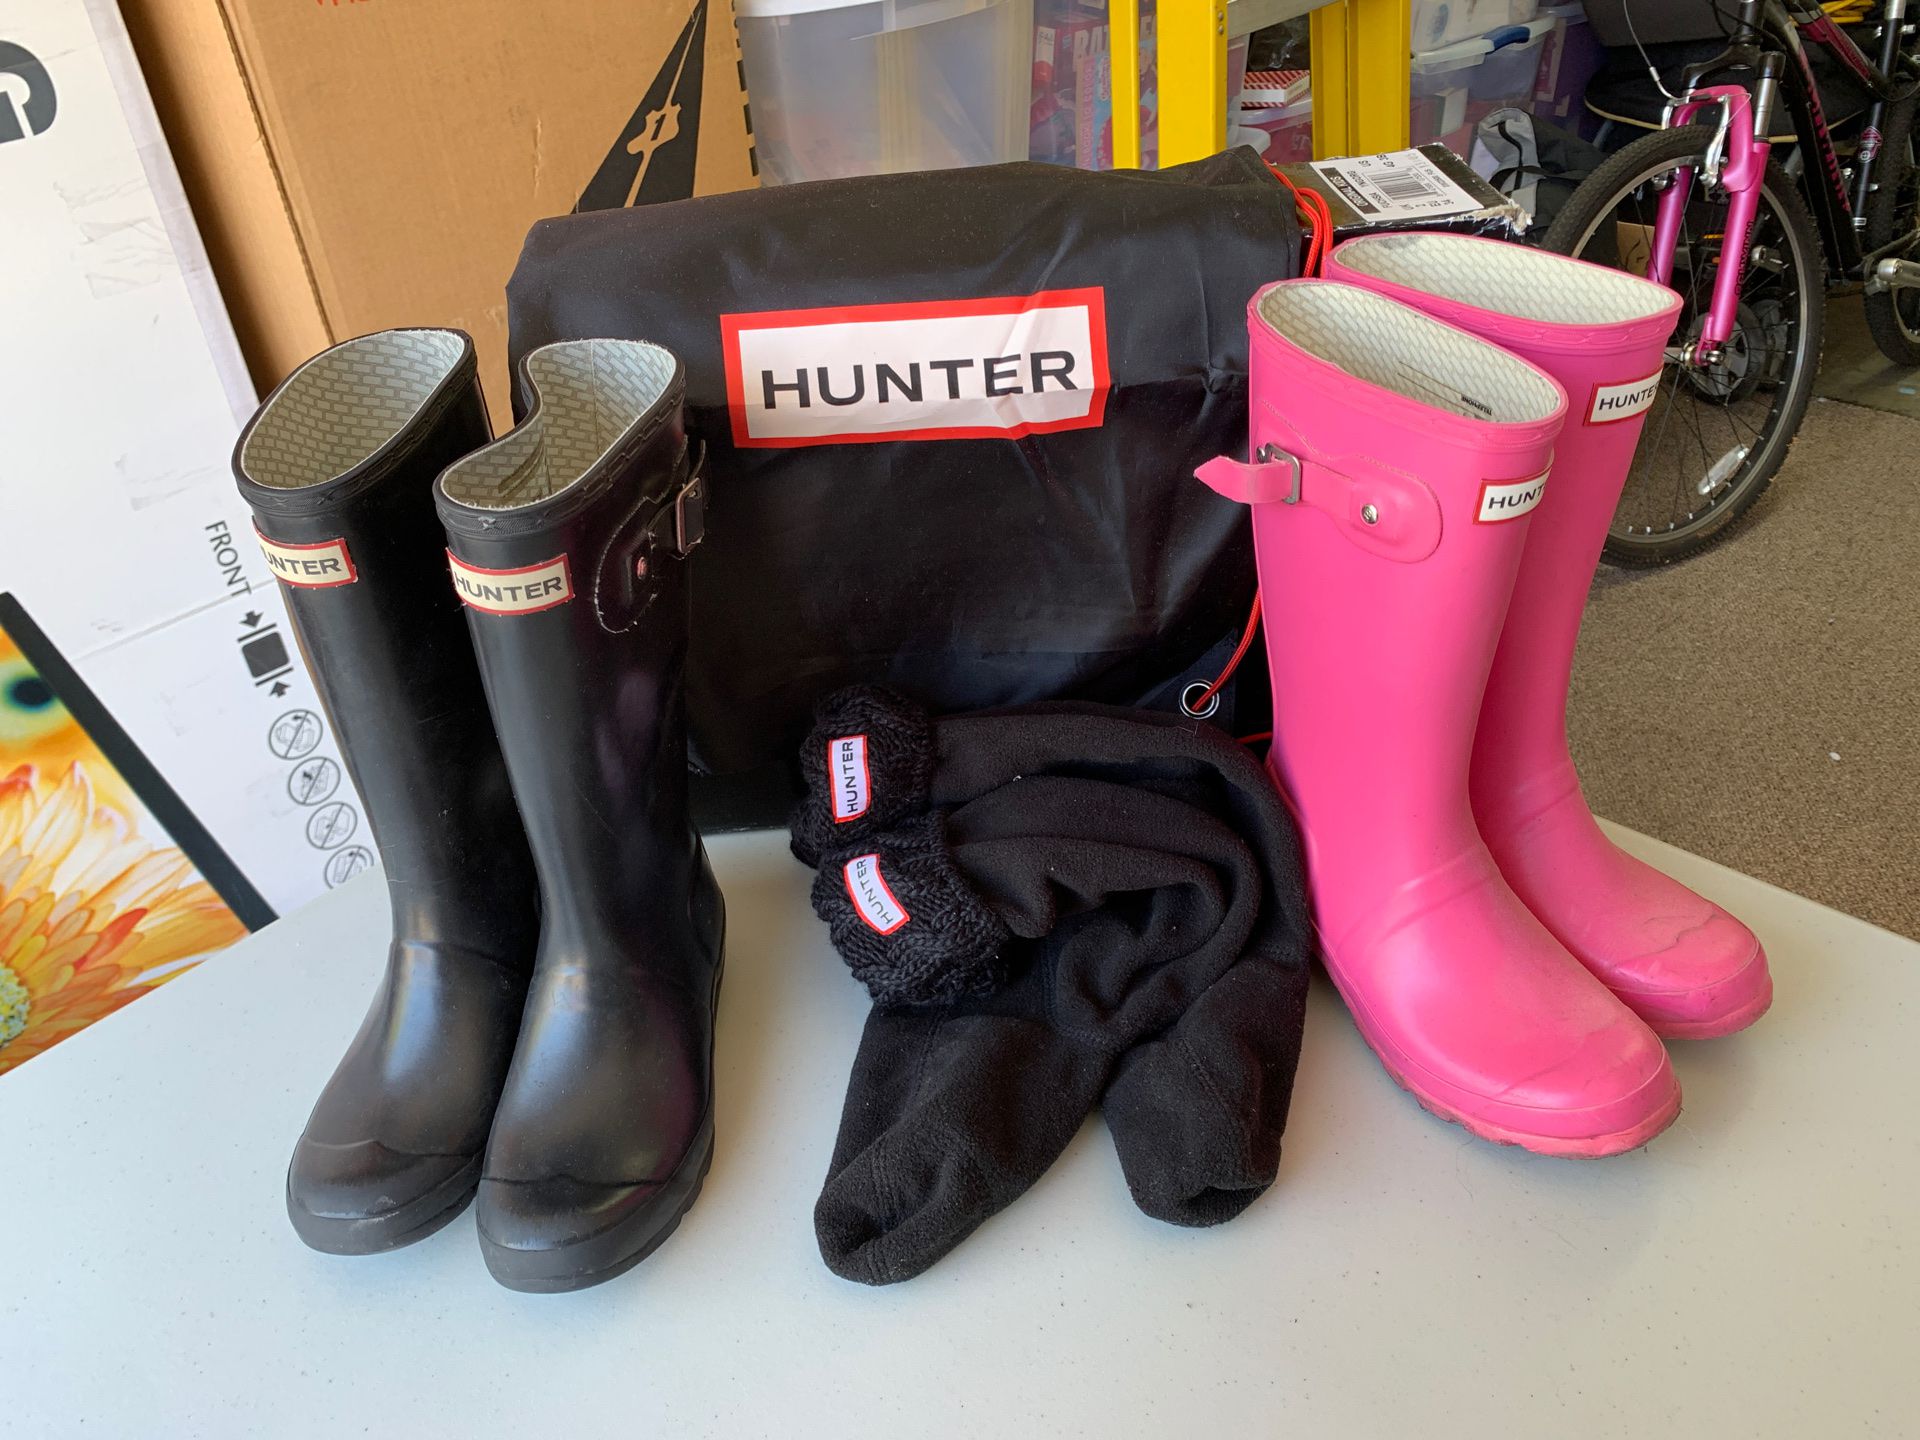 Hunter set (2 rain boots, pair of socks, bag)